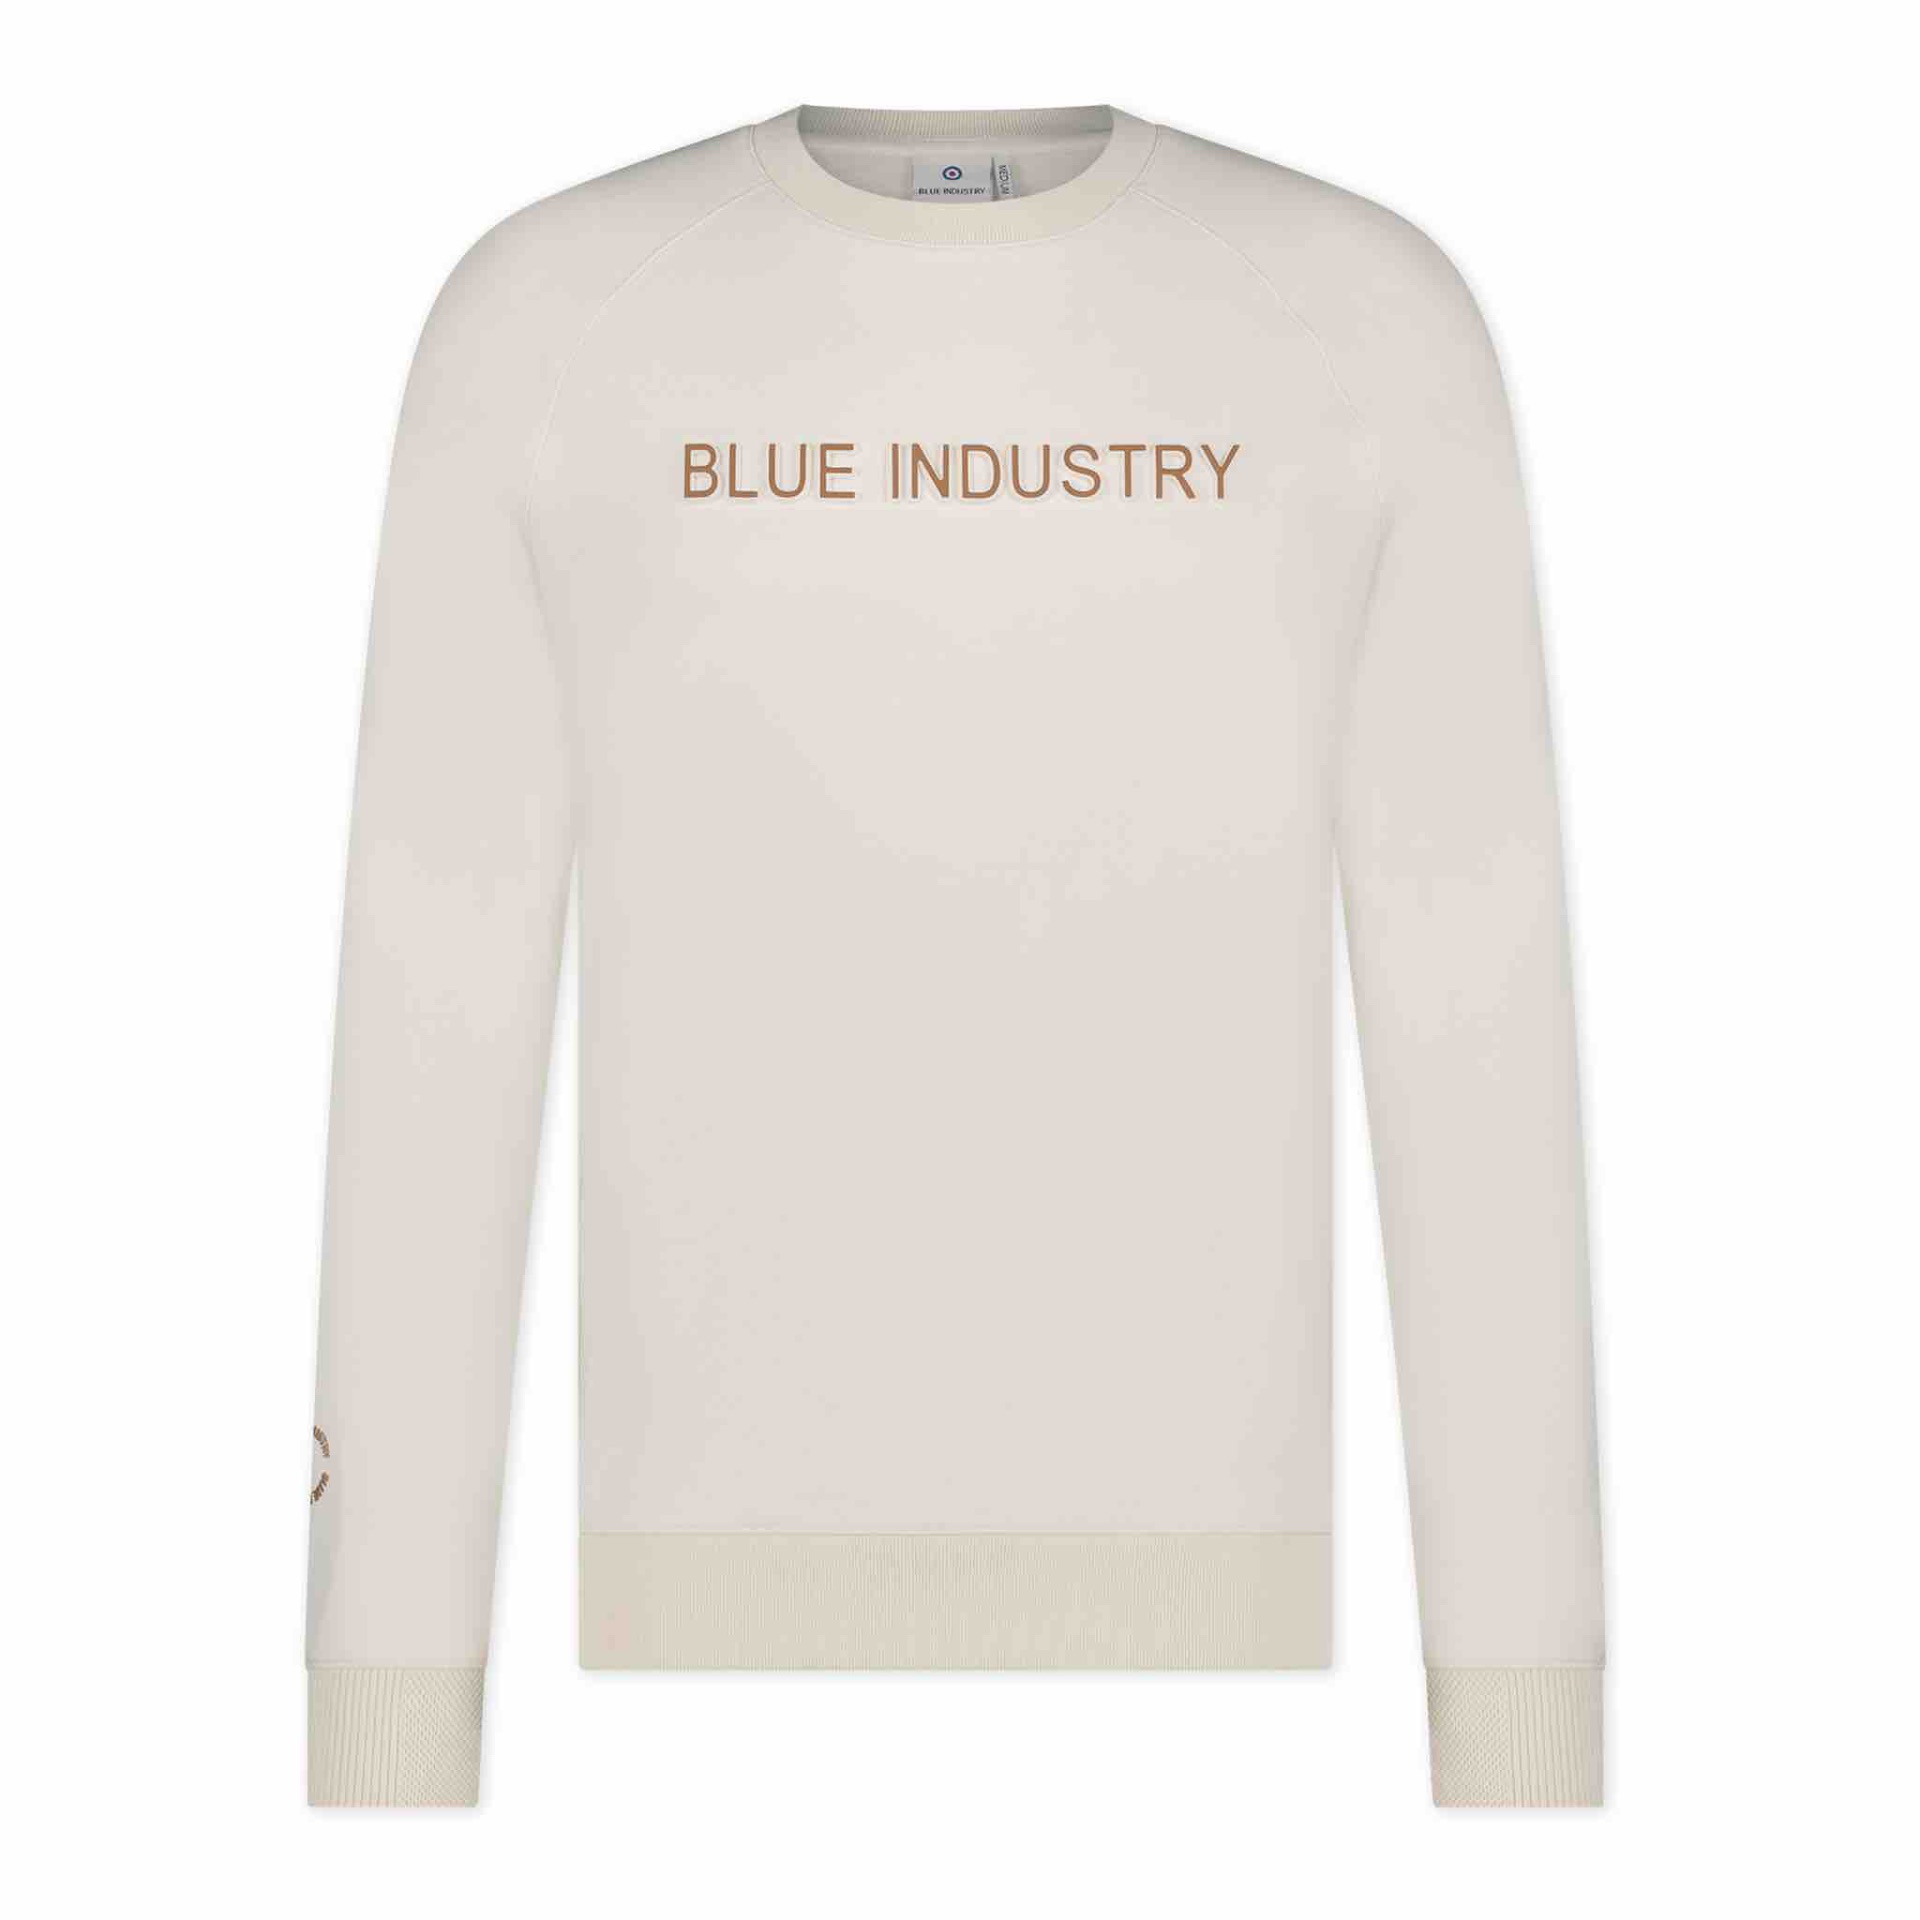 Blue Industry sweaters